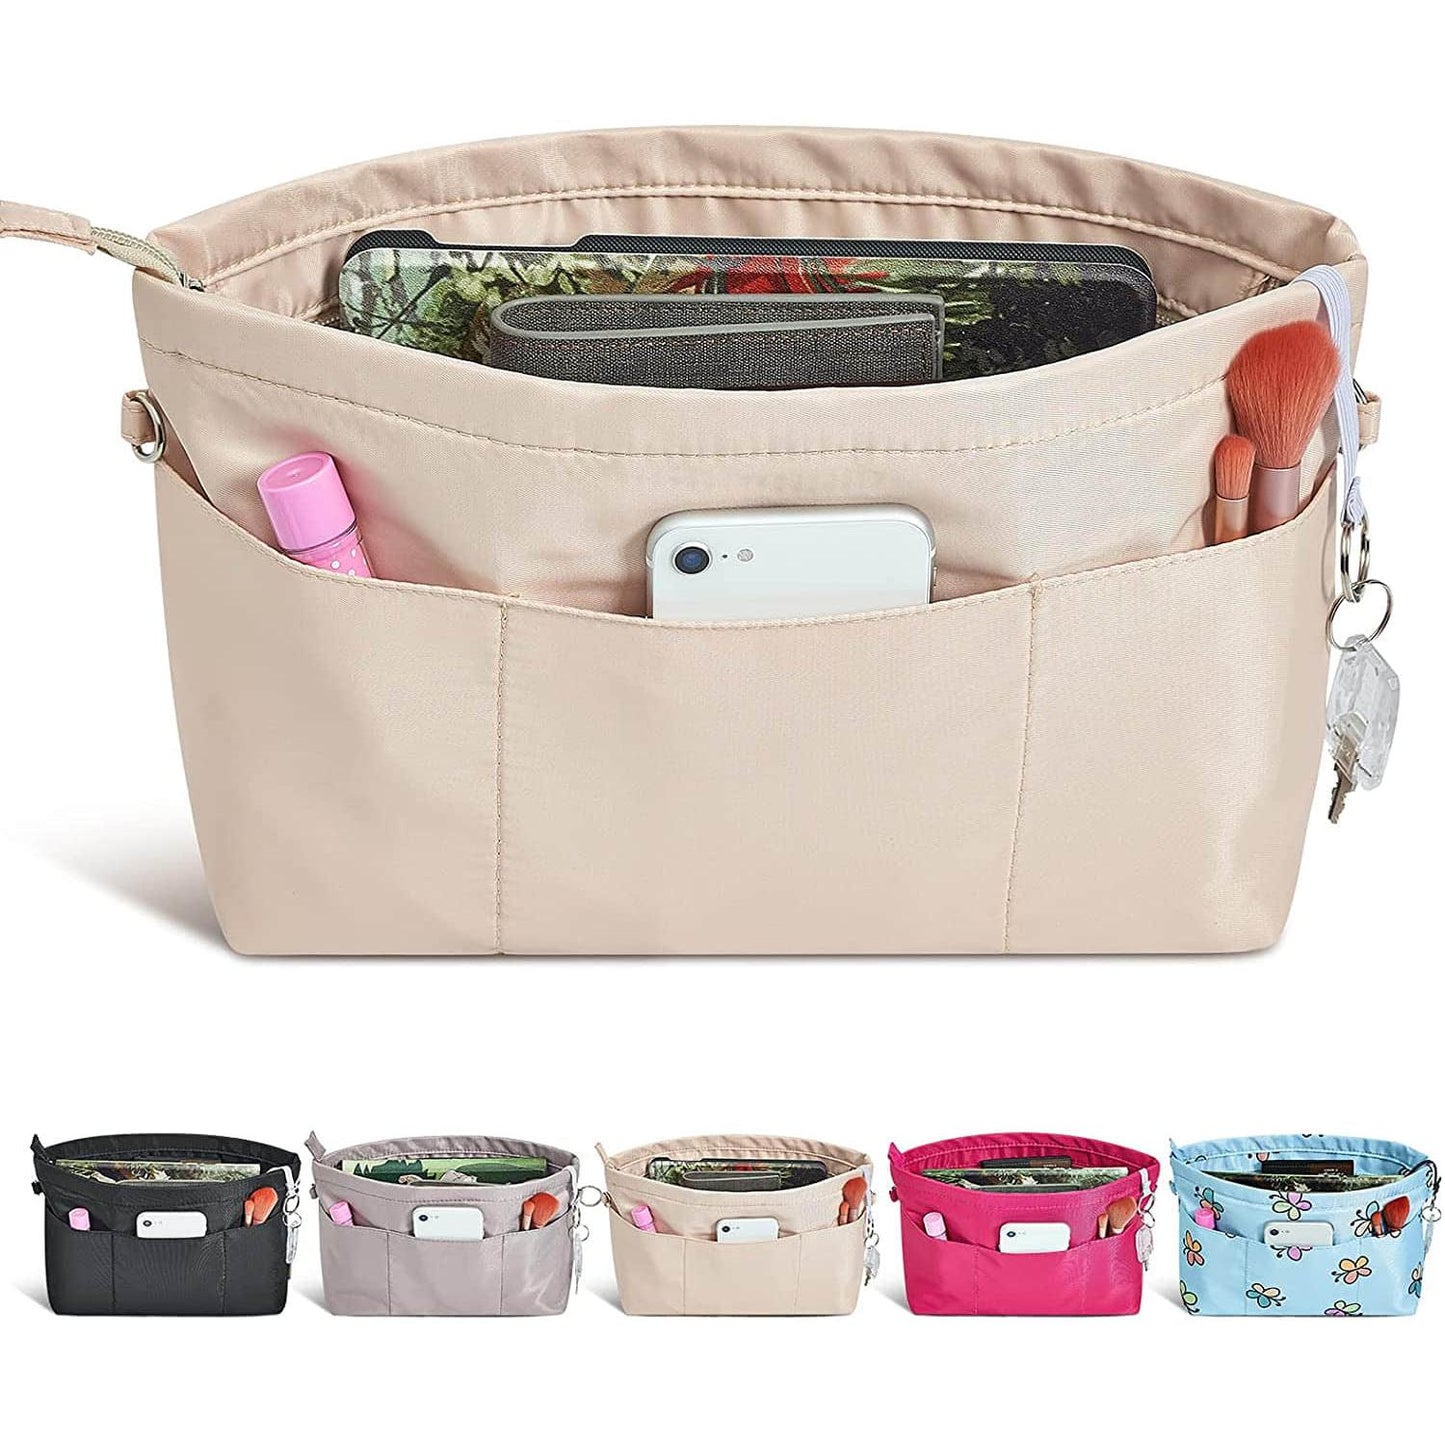 A-Premium Nylon Purse Organizer Tote Handbag Insert Organizers Bag